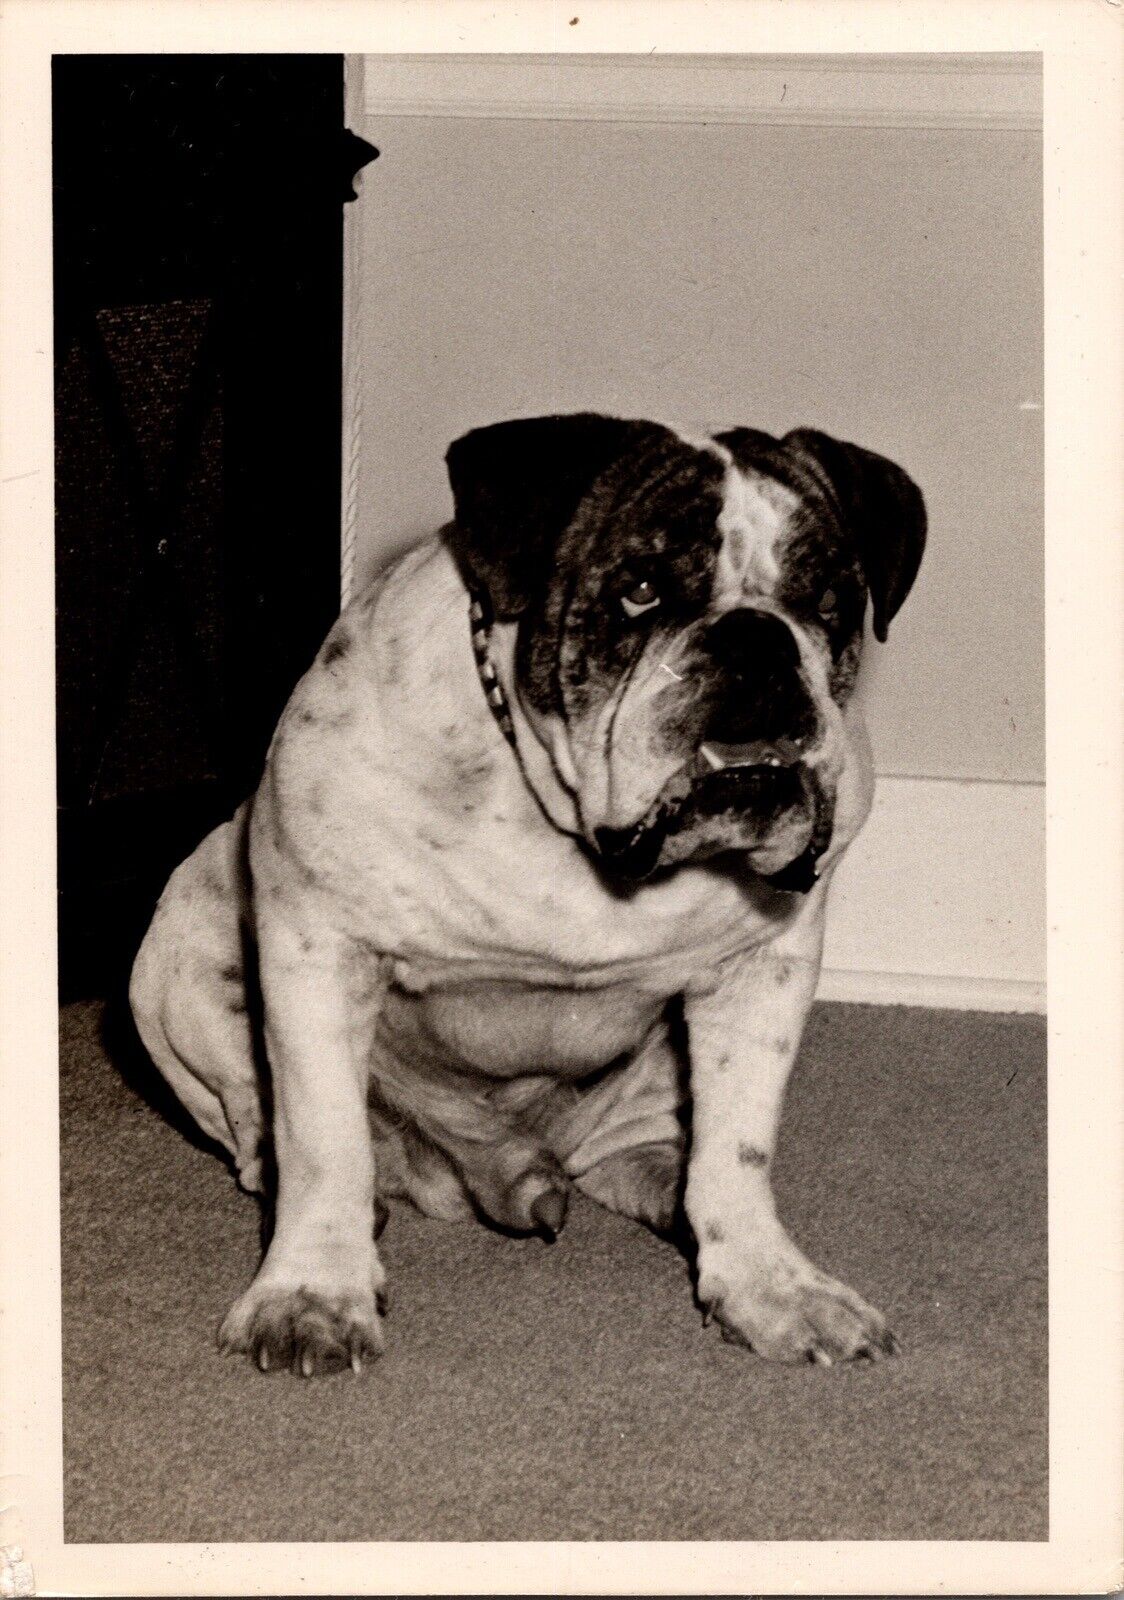 Vtg Found B&W Photo 1950 Dog Pet Retro Animal Canine Outdoors K9